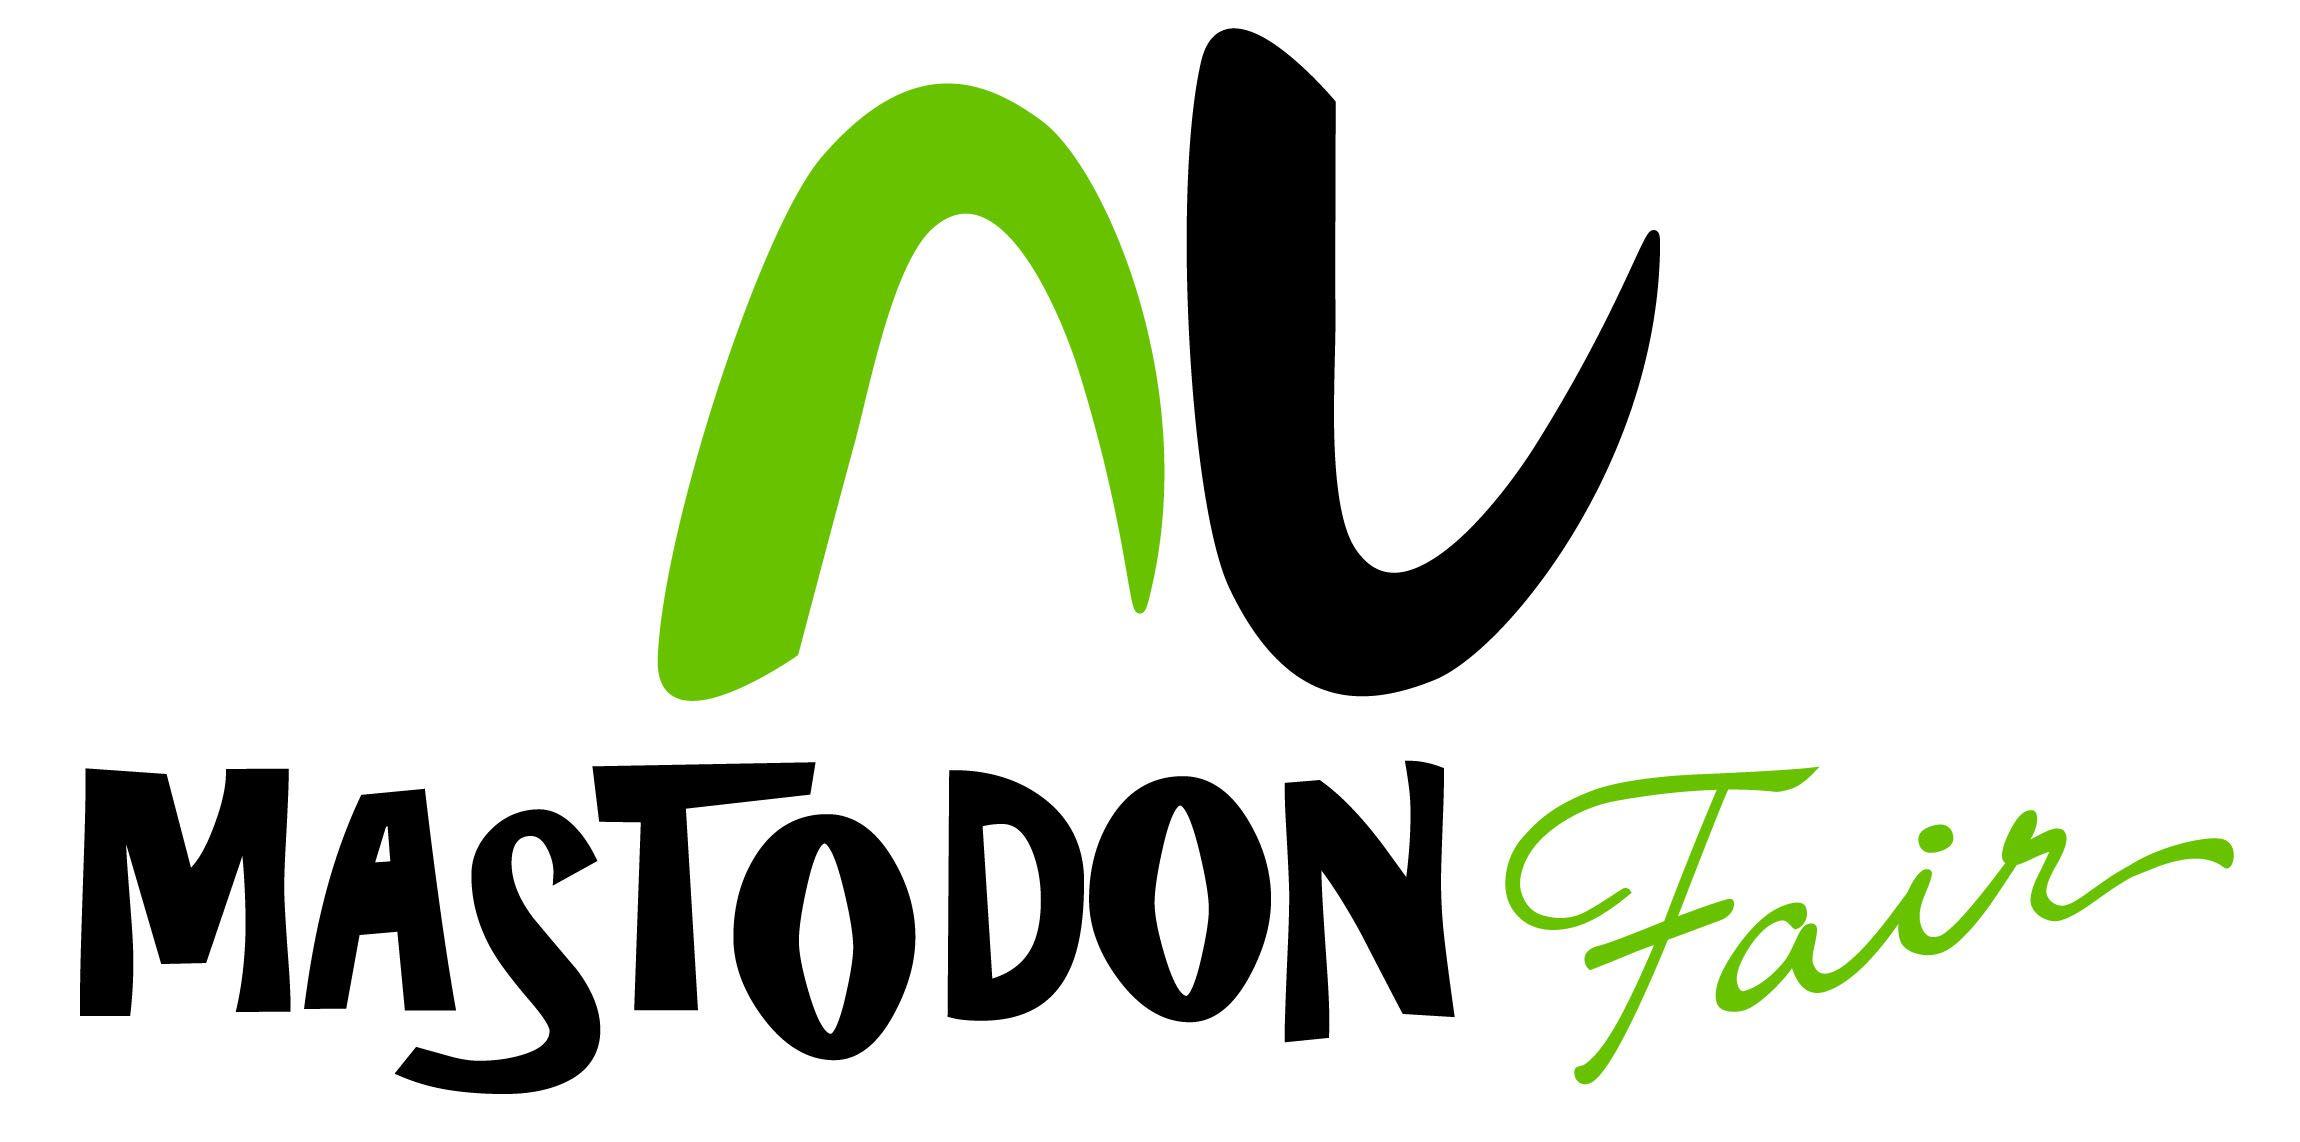 Mastodon Logo - Logos & Pictures - Mastodon Art/Science Regional Fair